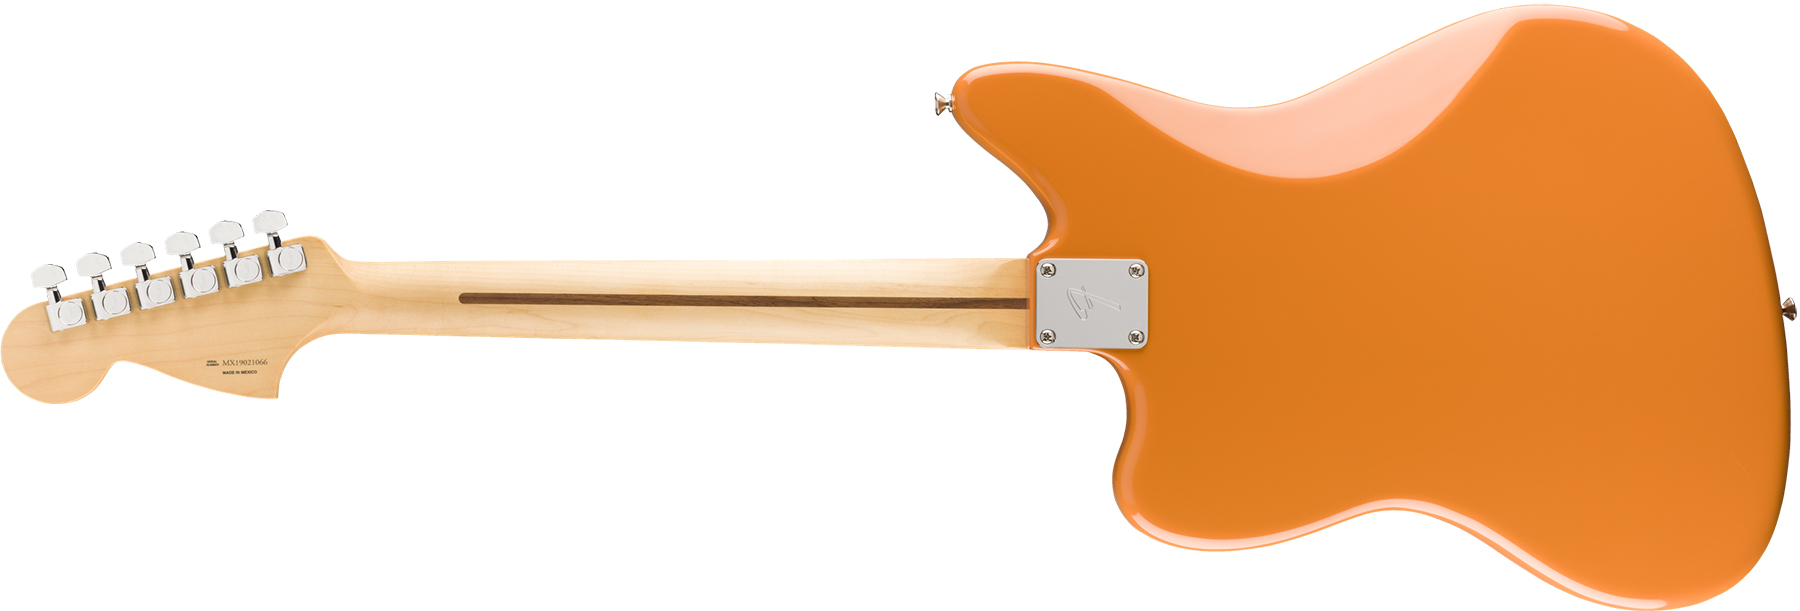 Fender Jaguar Player Mex Hs Pf - Capri Orange - Retro-Rock-E-Gitarre - Variation 1